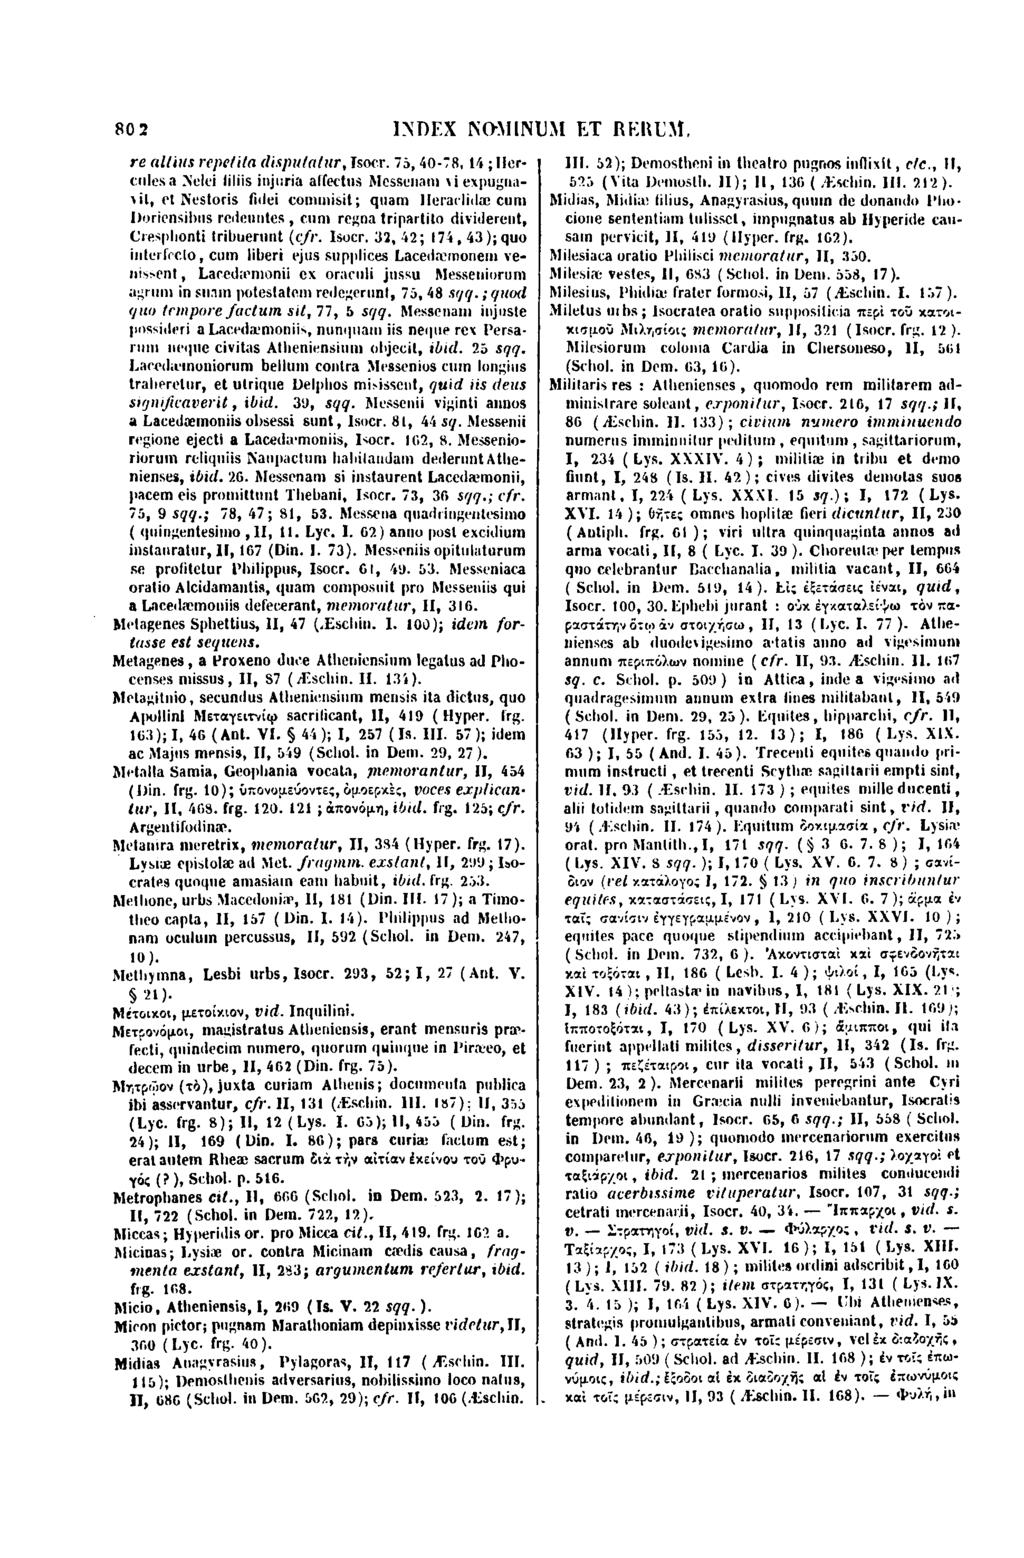 802 re aluns repentit (Iispulalur, Isocr. 75, 40-78.